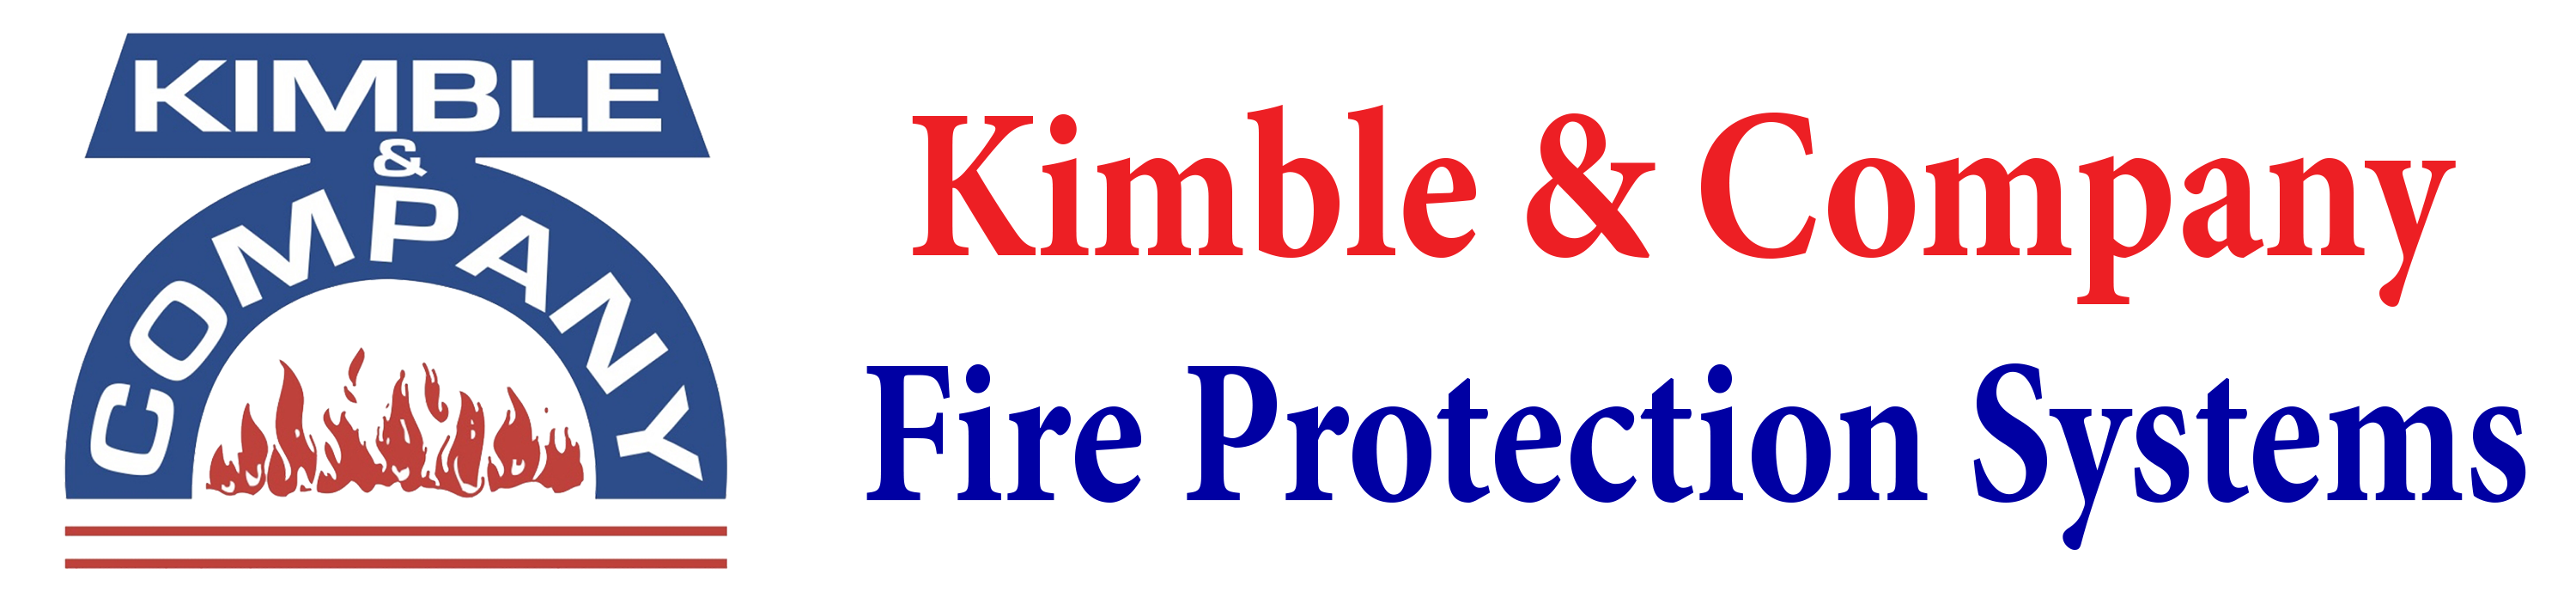 Kimble & Company Fire Protection Systems